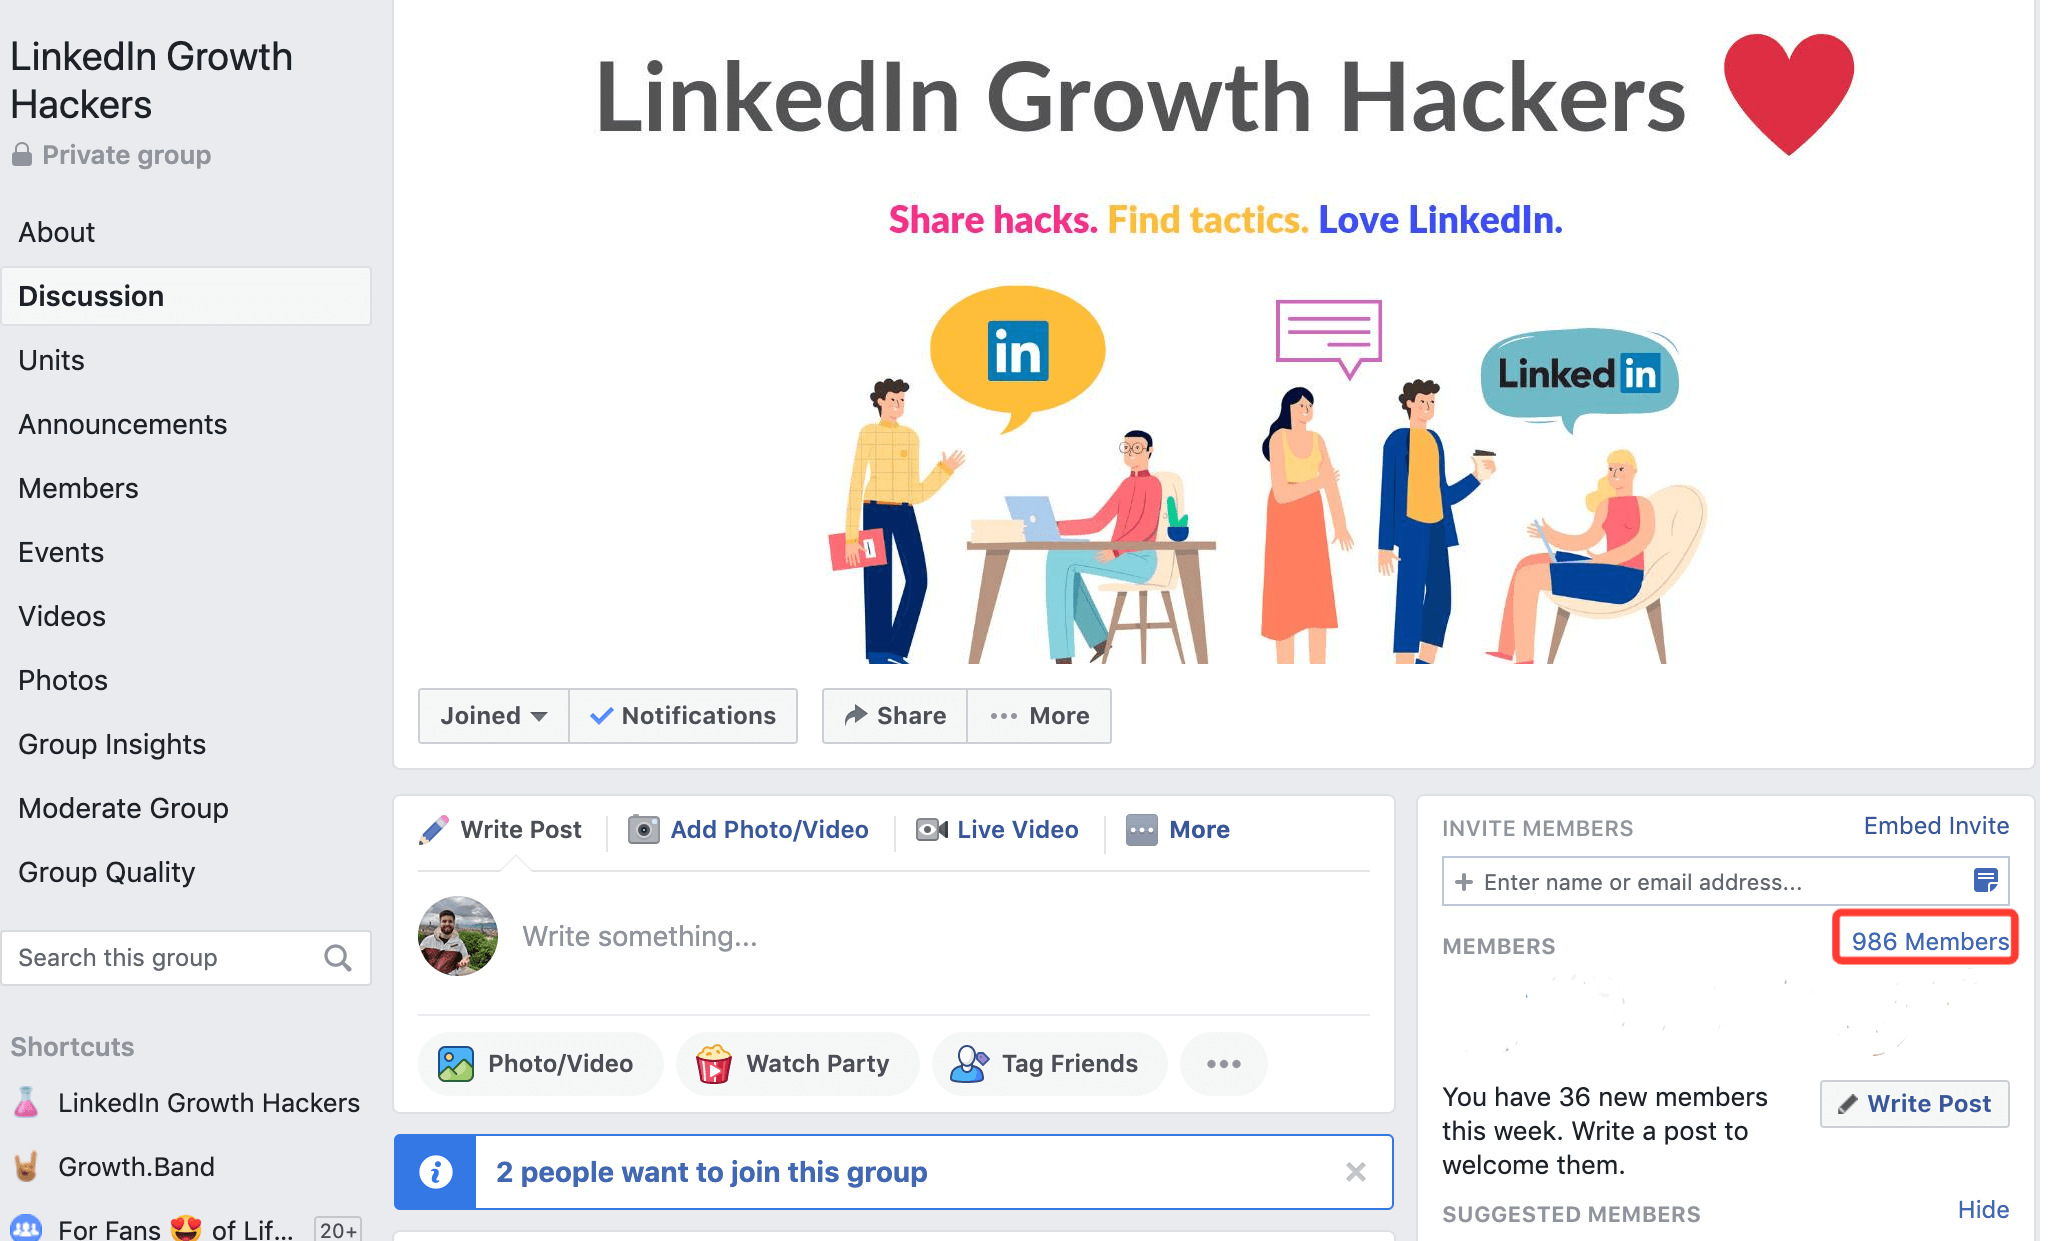 LinkedIn Growth Hackers